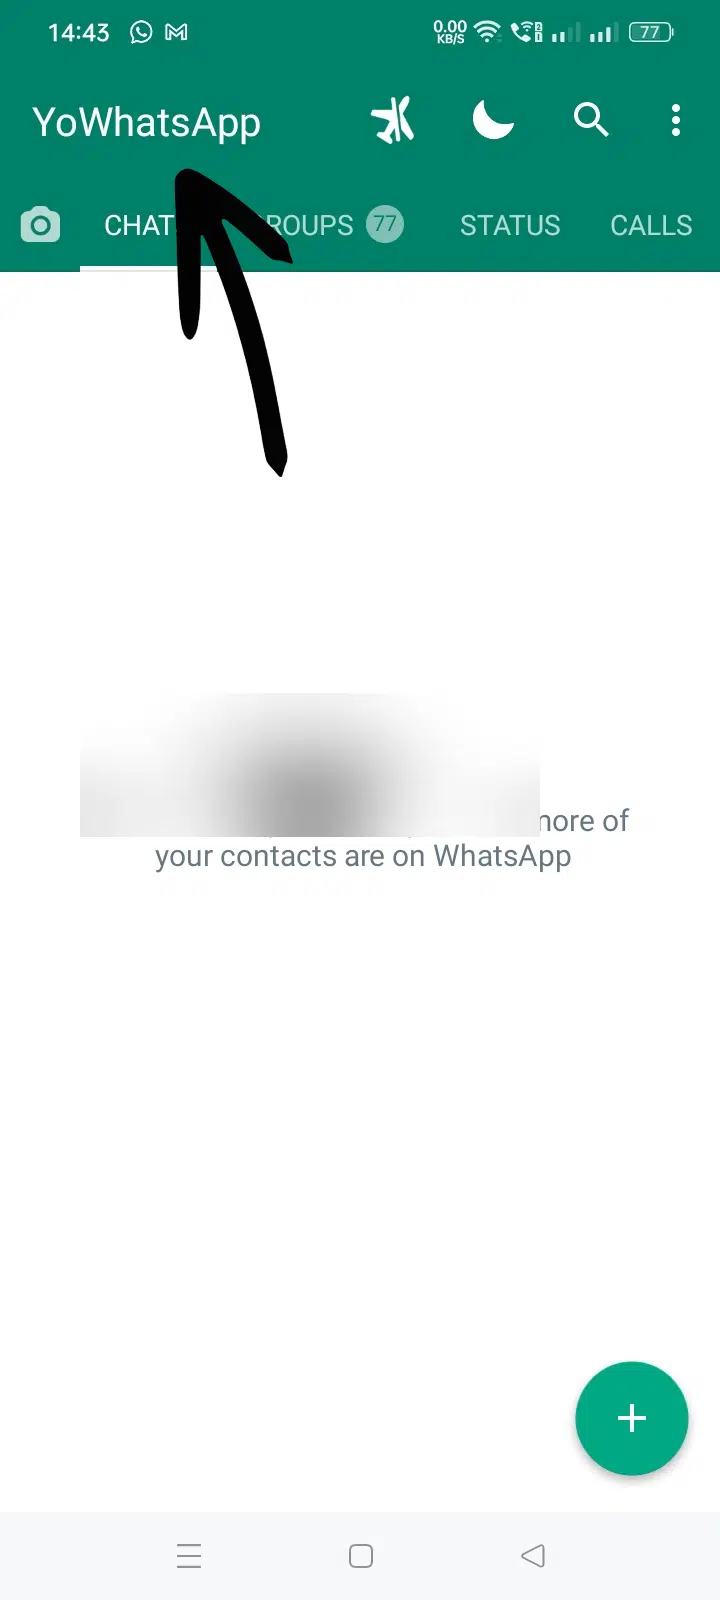 yowhatsapp-chats-screen